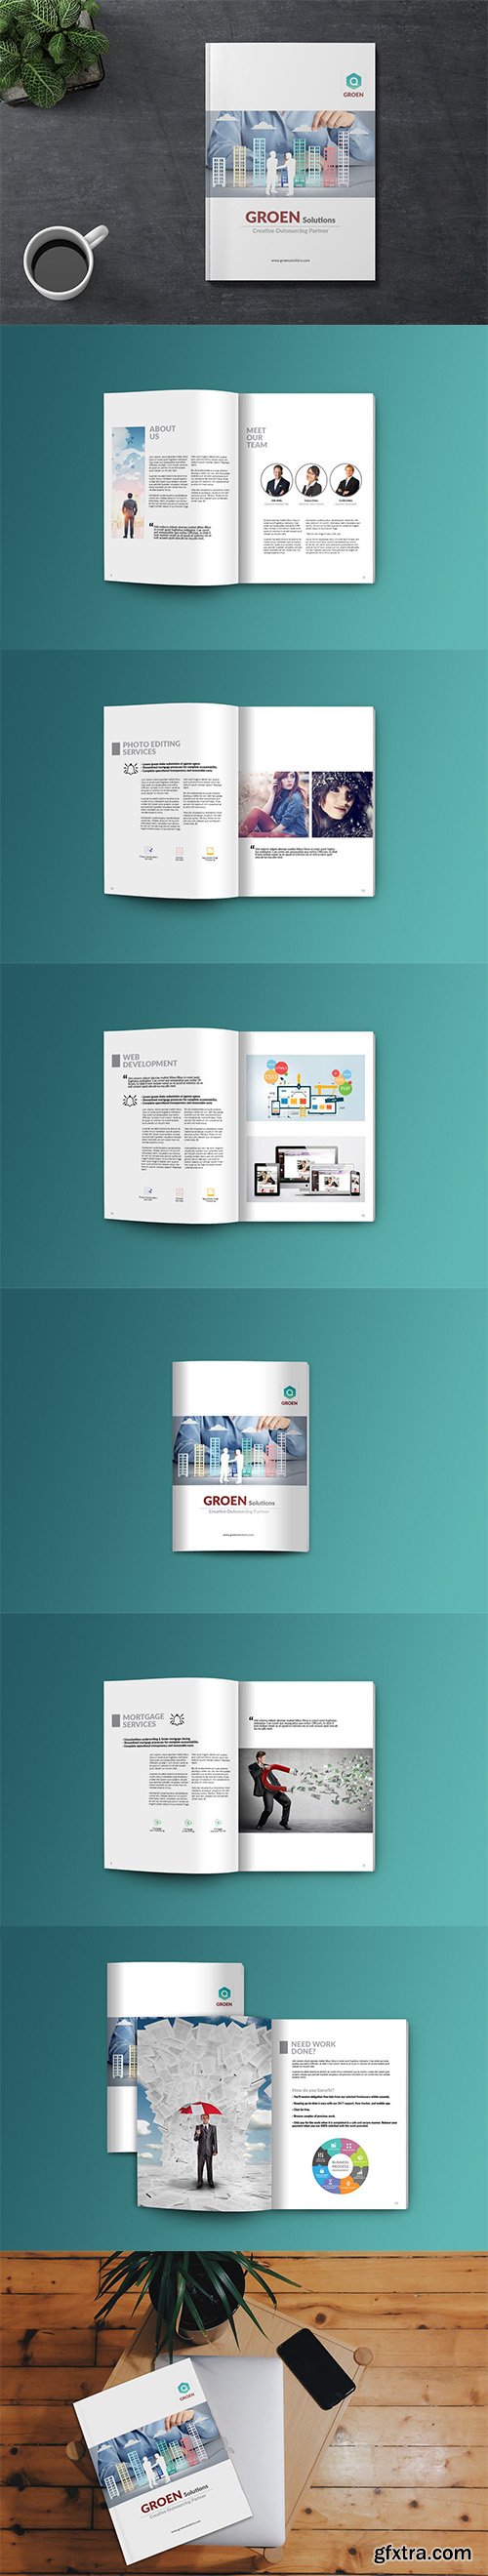 Corporate Brochure/Megazine